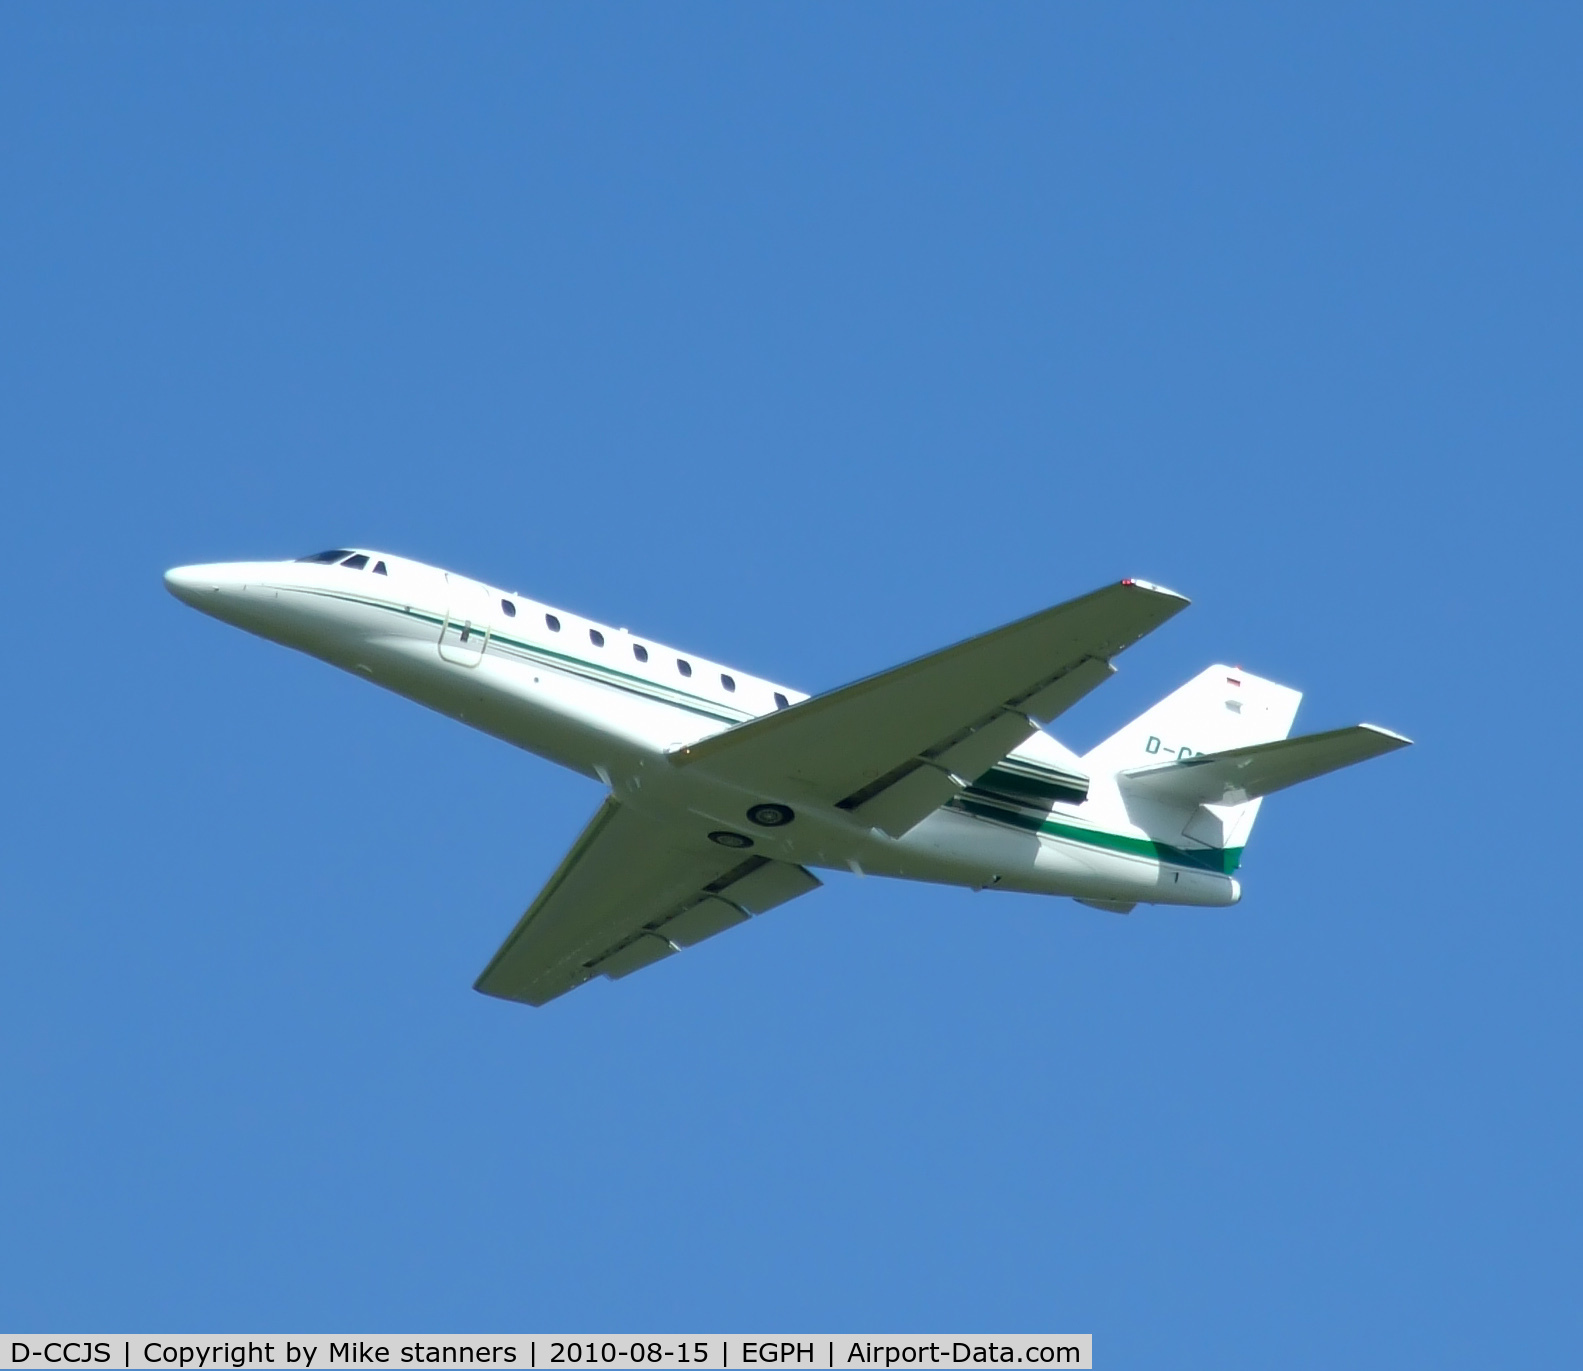 D-CCJS, 2007 Cessna 680 Citation Sovereign C/N 680-0175, VHM Schul und charterflug Citation sovereign departs runway 24